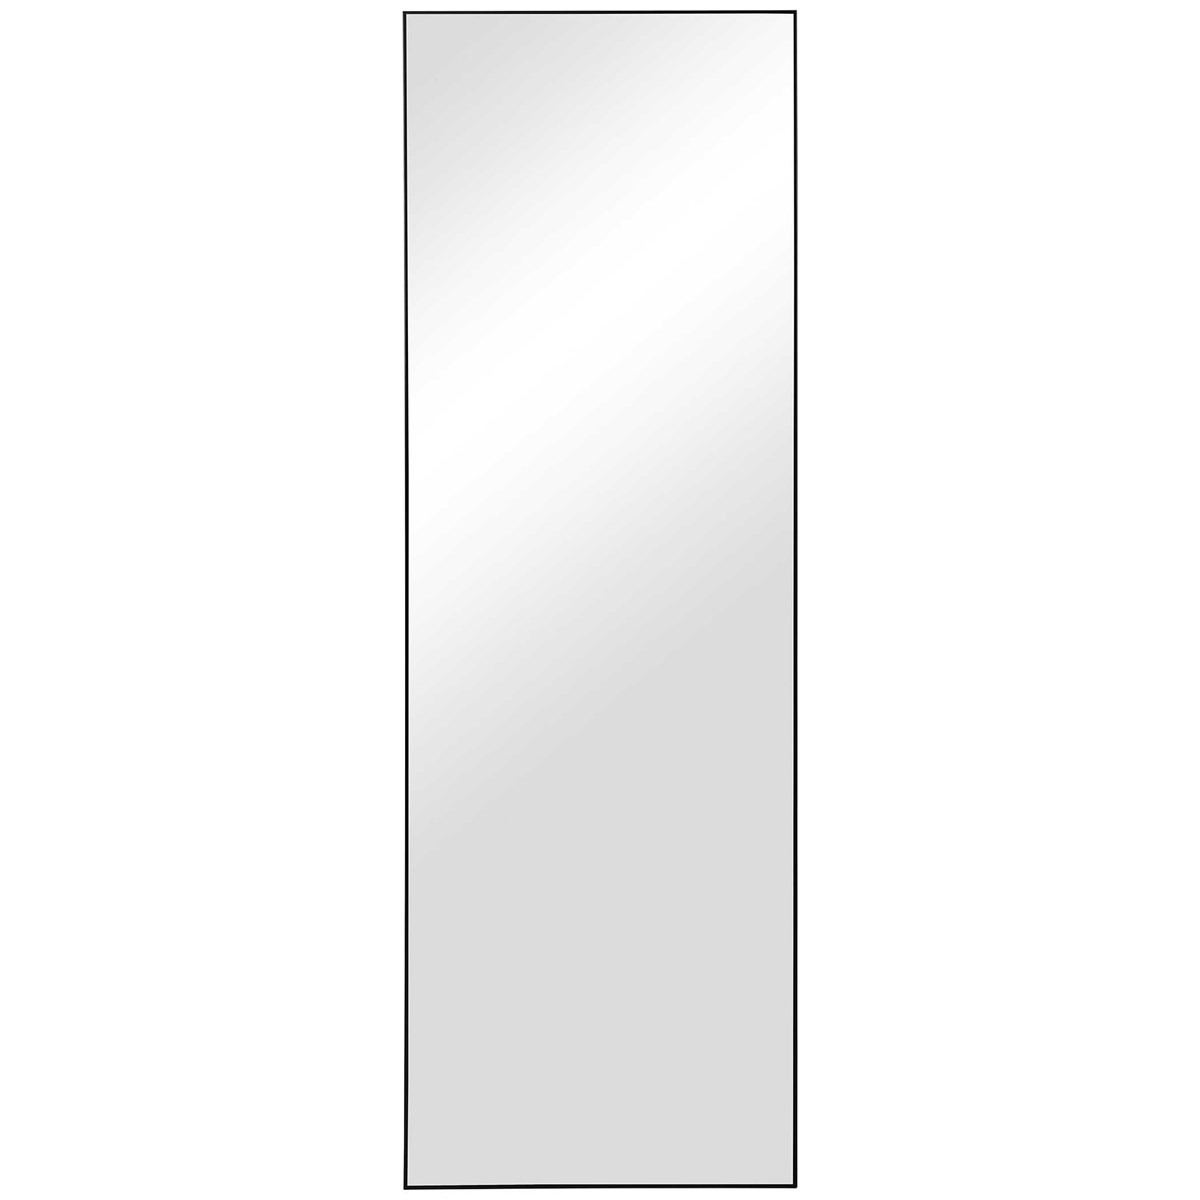 Mirror - Image 0